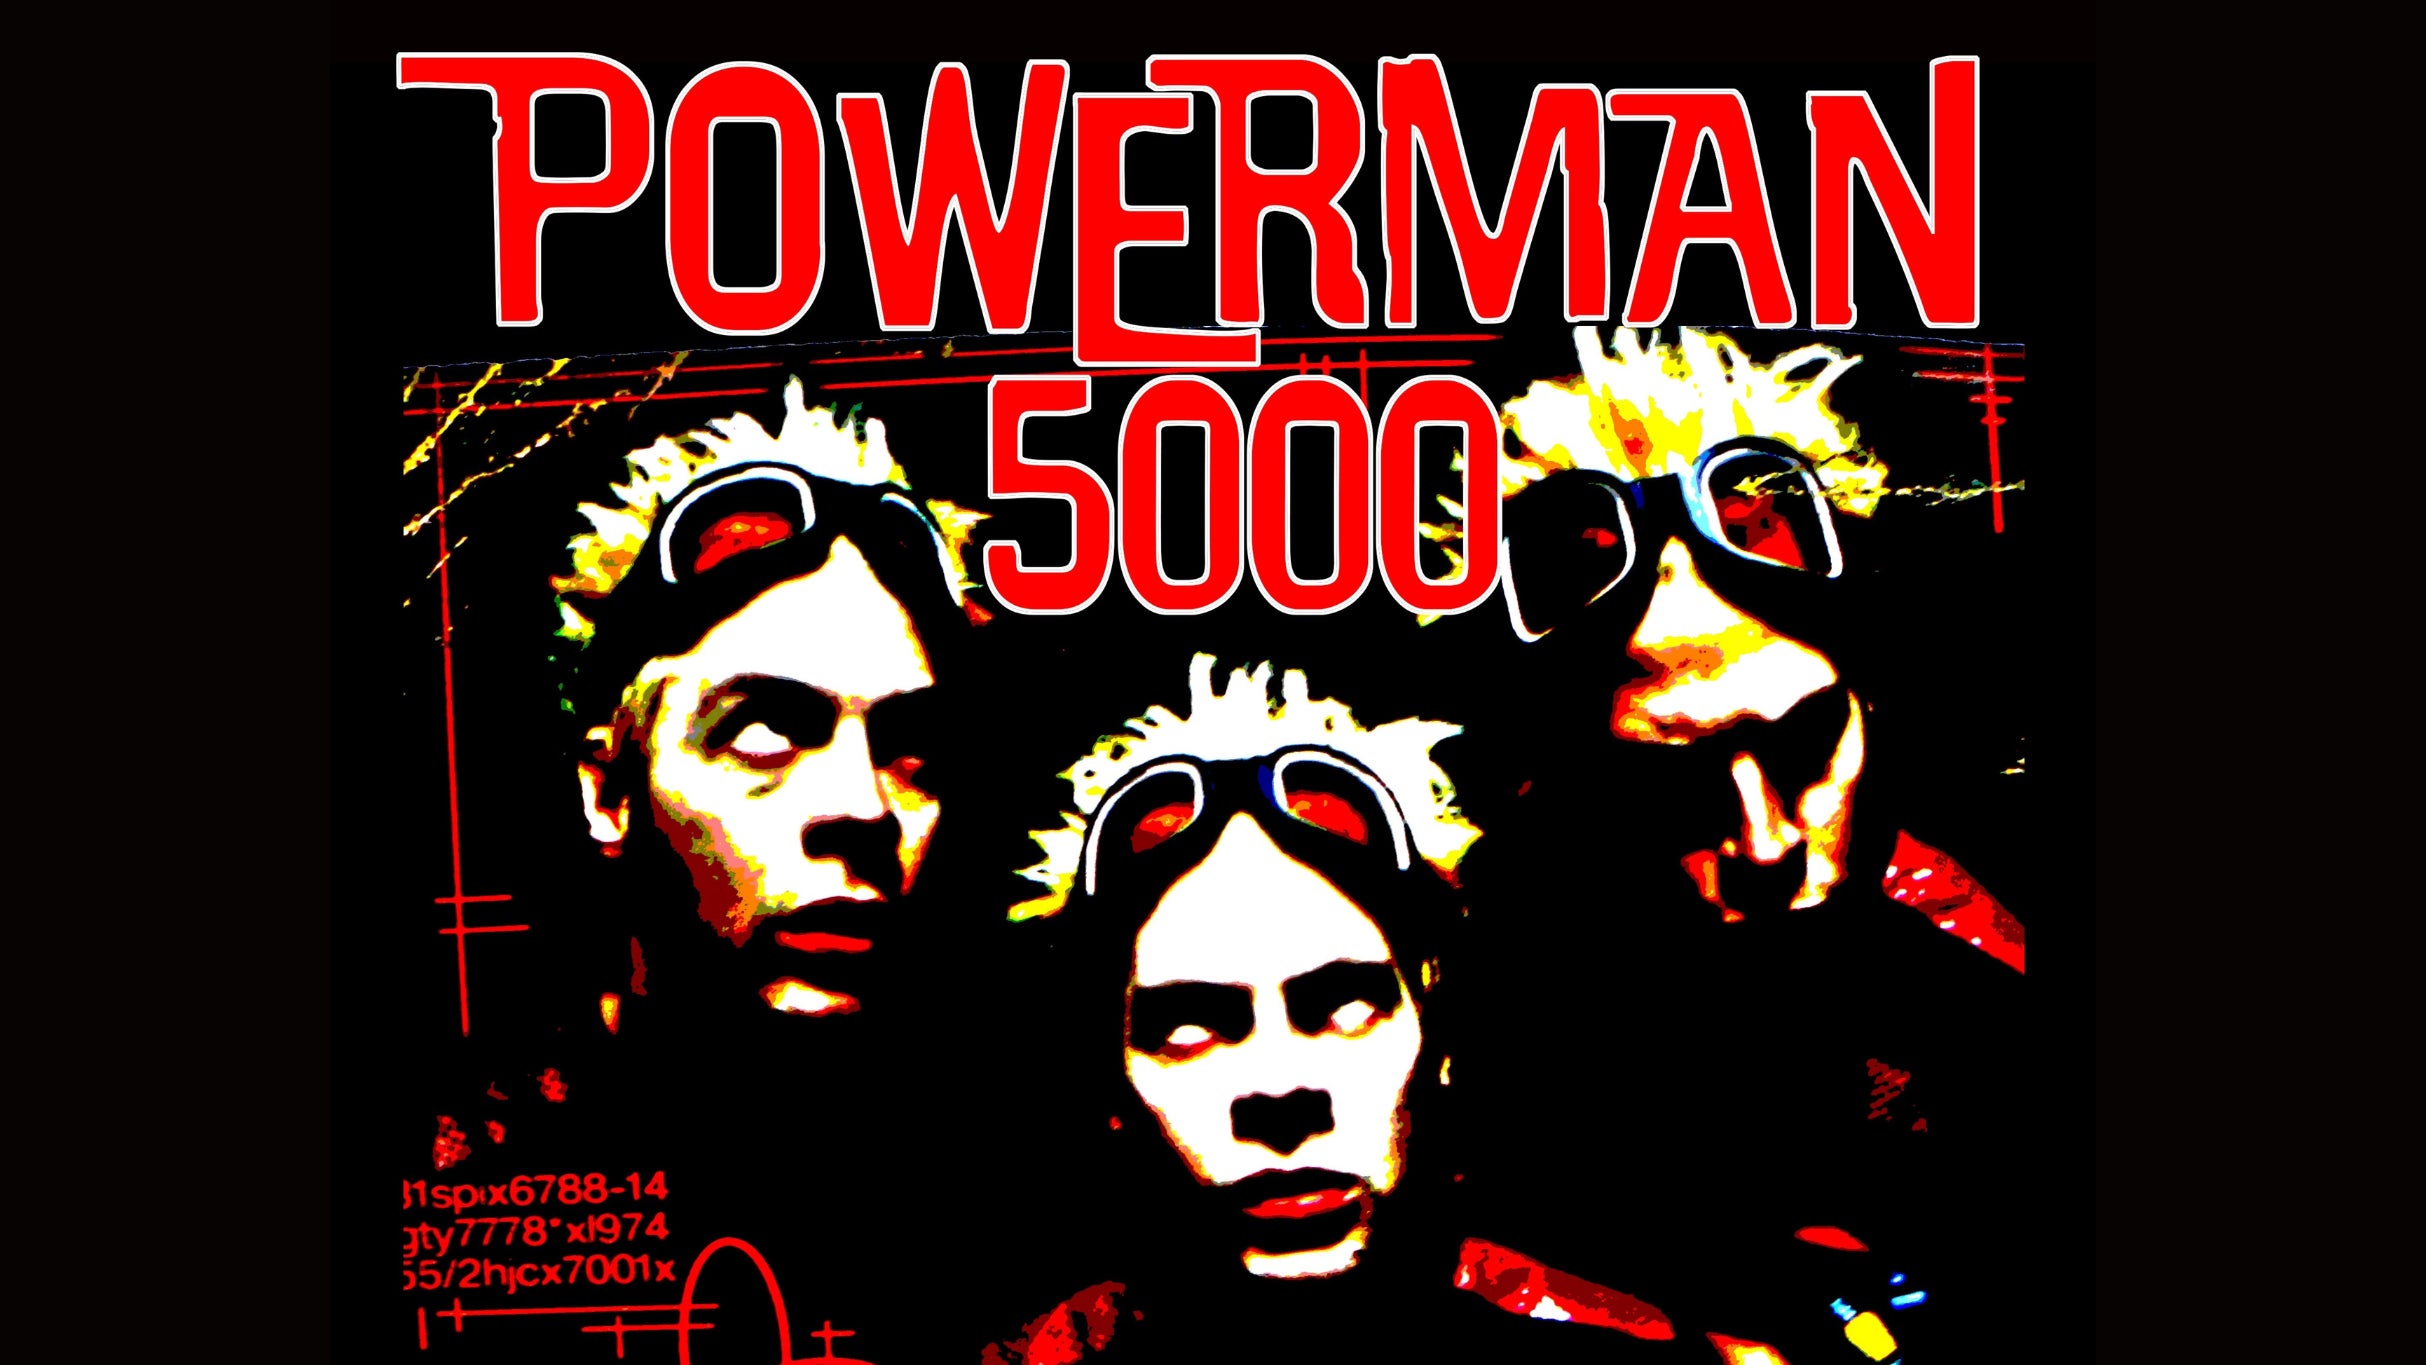 Powerman 5000 at CONSTELLATION ROOM - Santa Ana, CA 92704